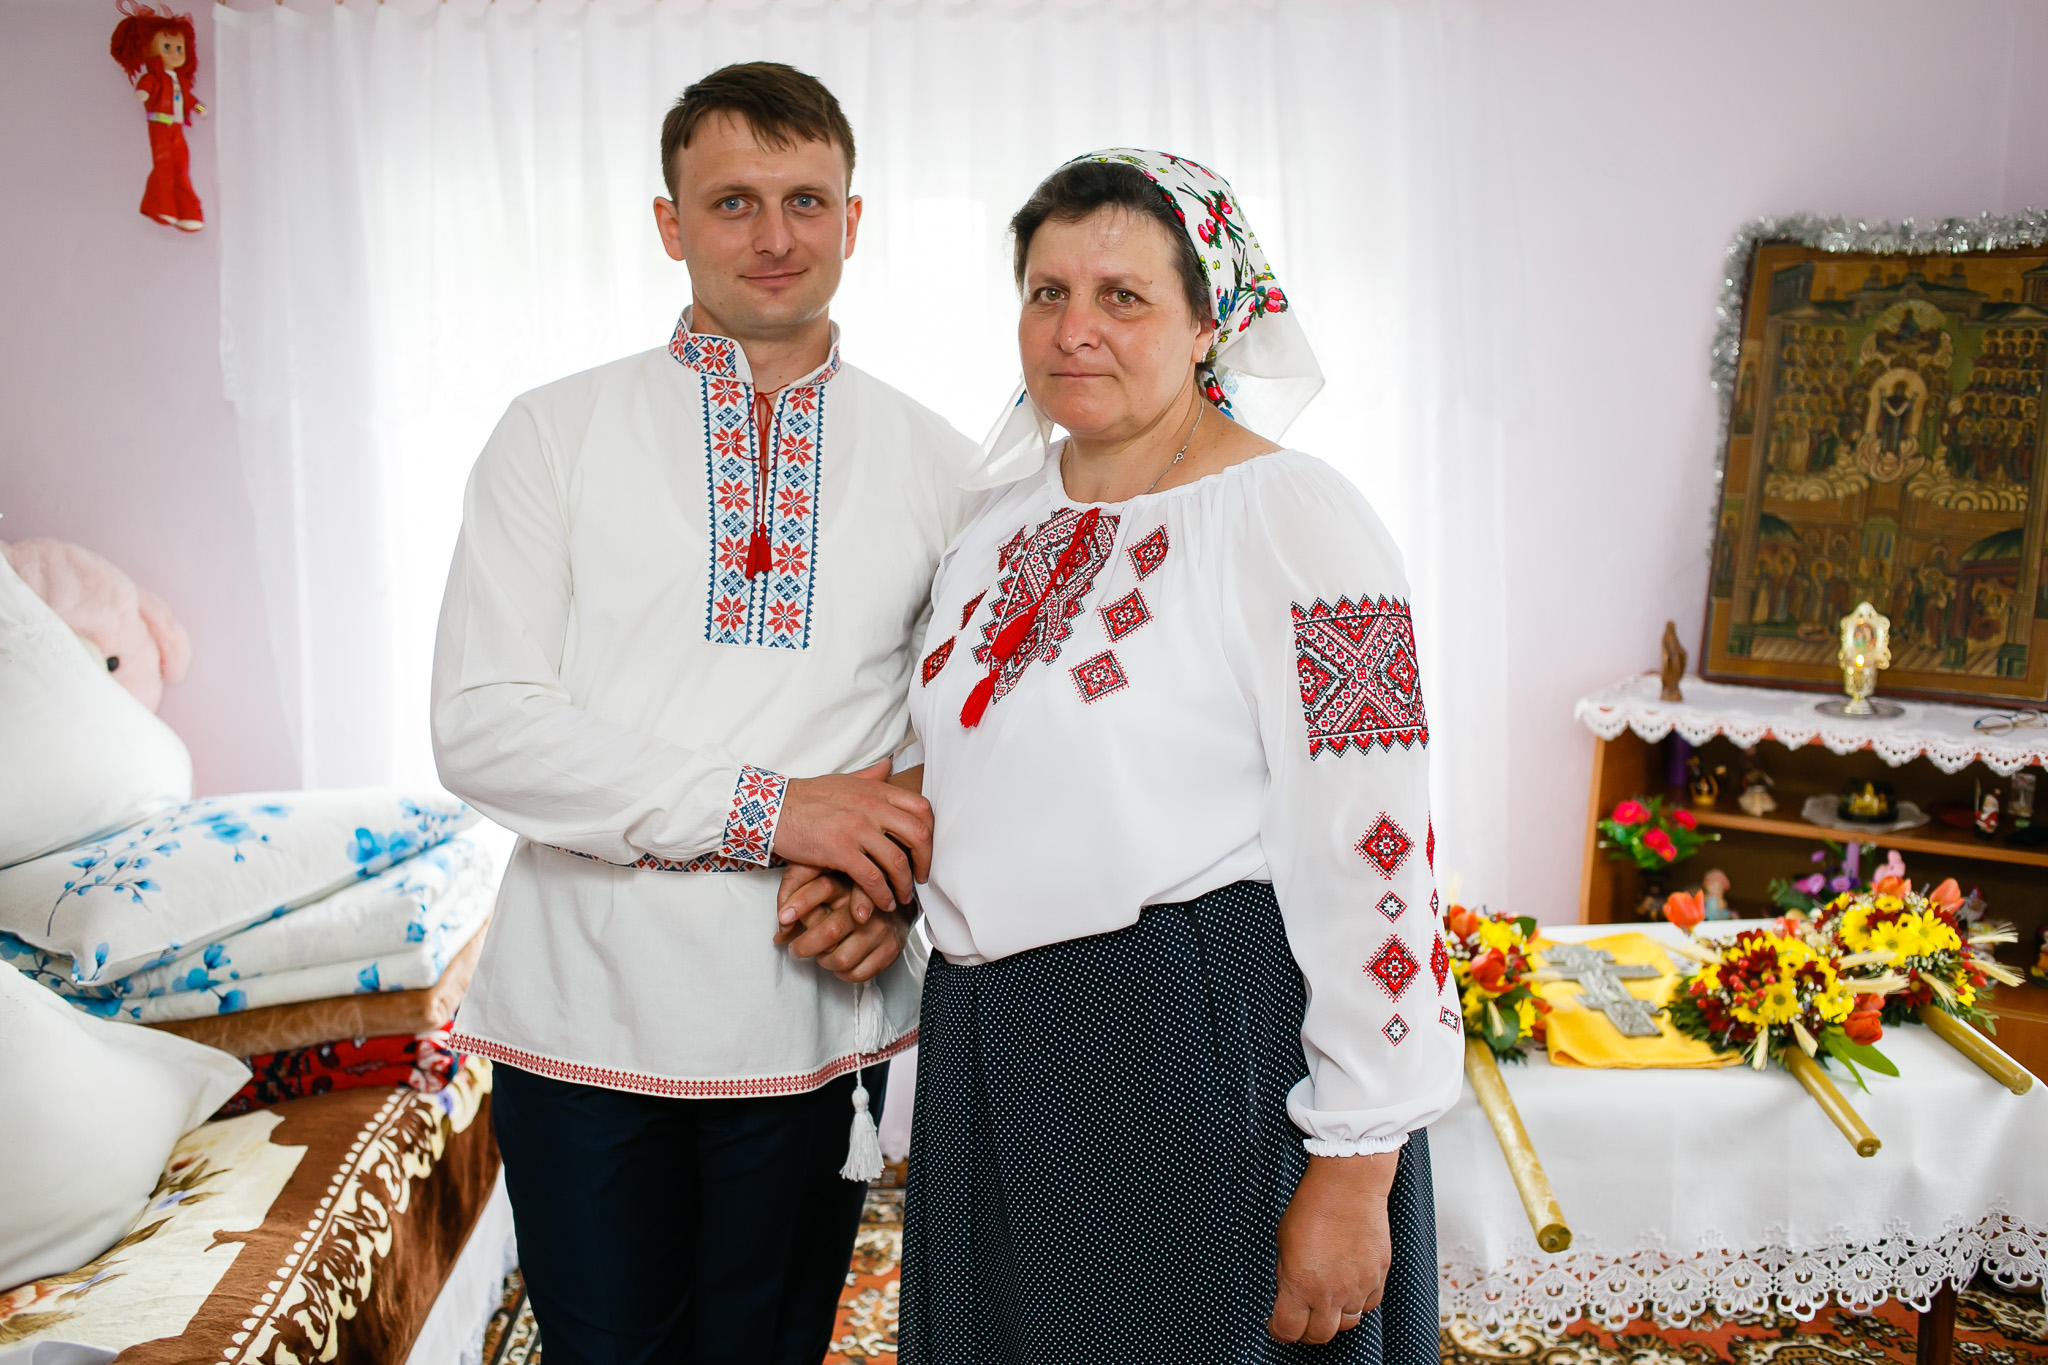 Nuntă tradițională Elisabeta și Alexandru fotograf profesionist nunta Iasi www.paulpadurariu.ro © 2018 Paul Padurariu pregatiri miri 3